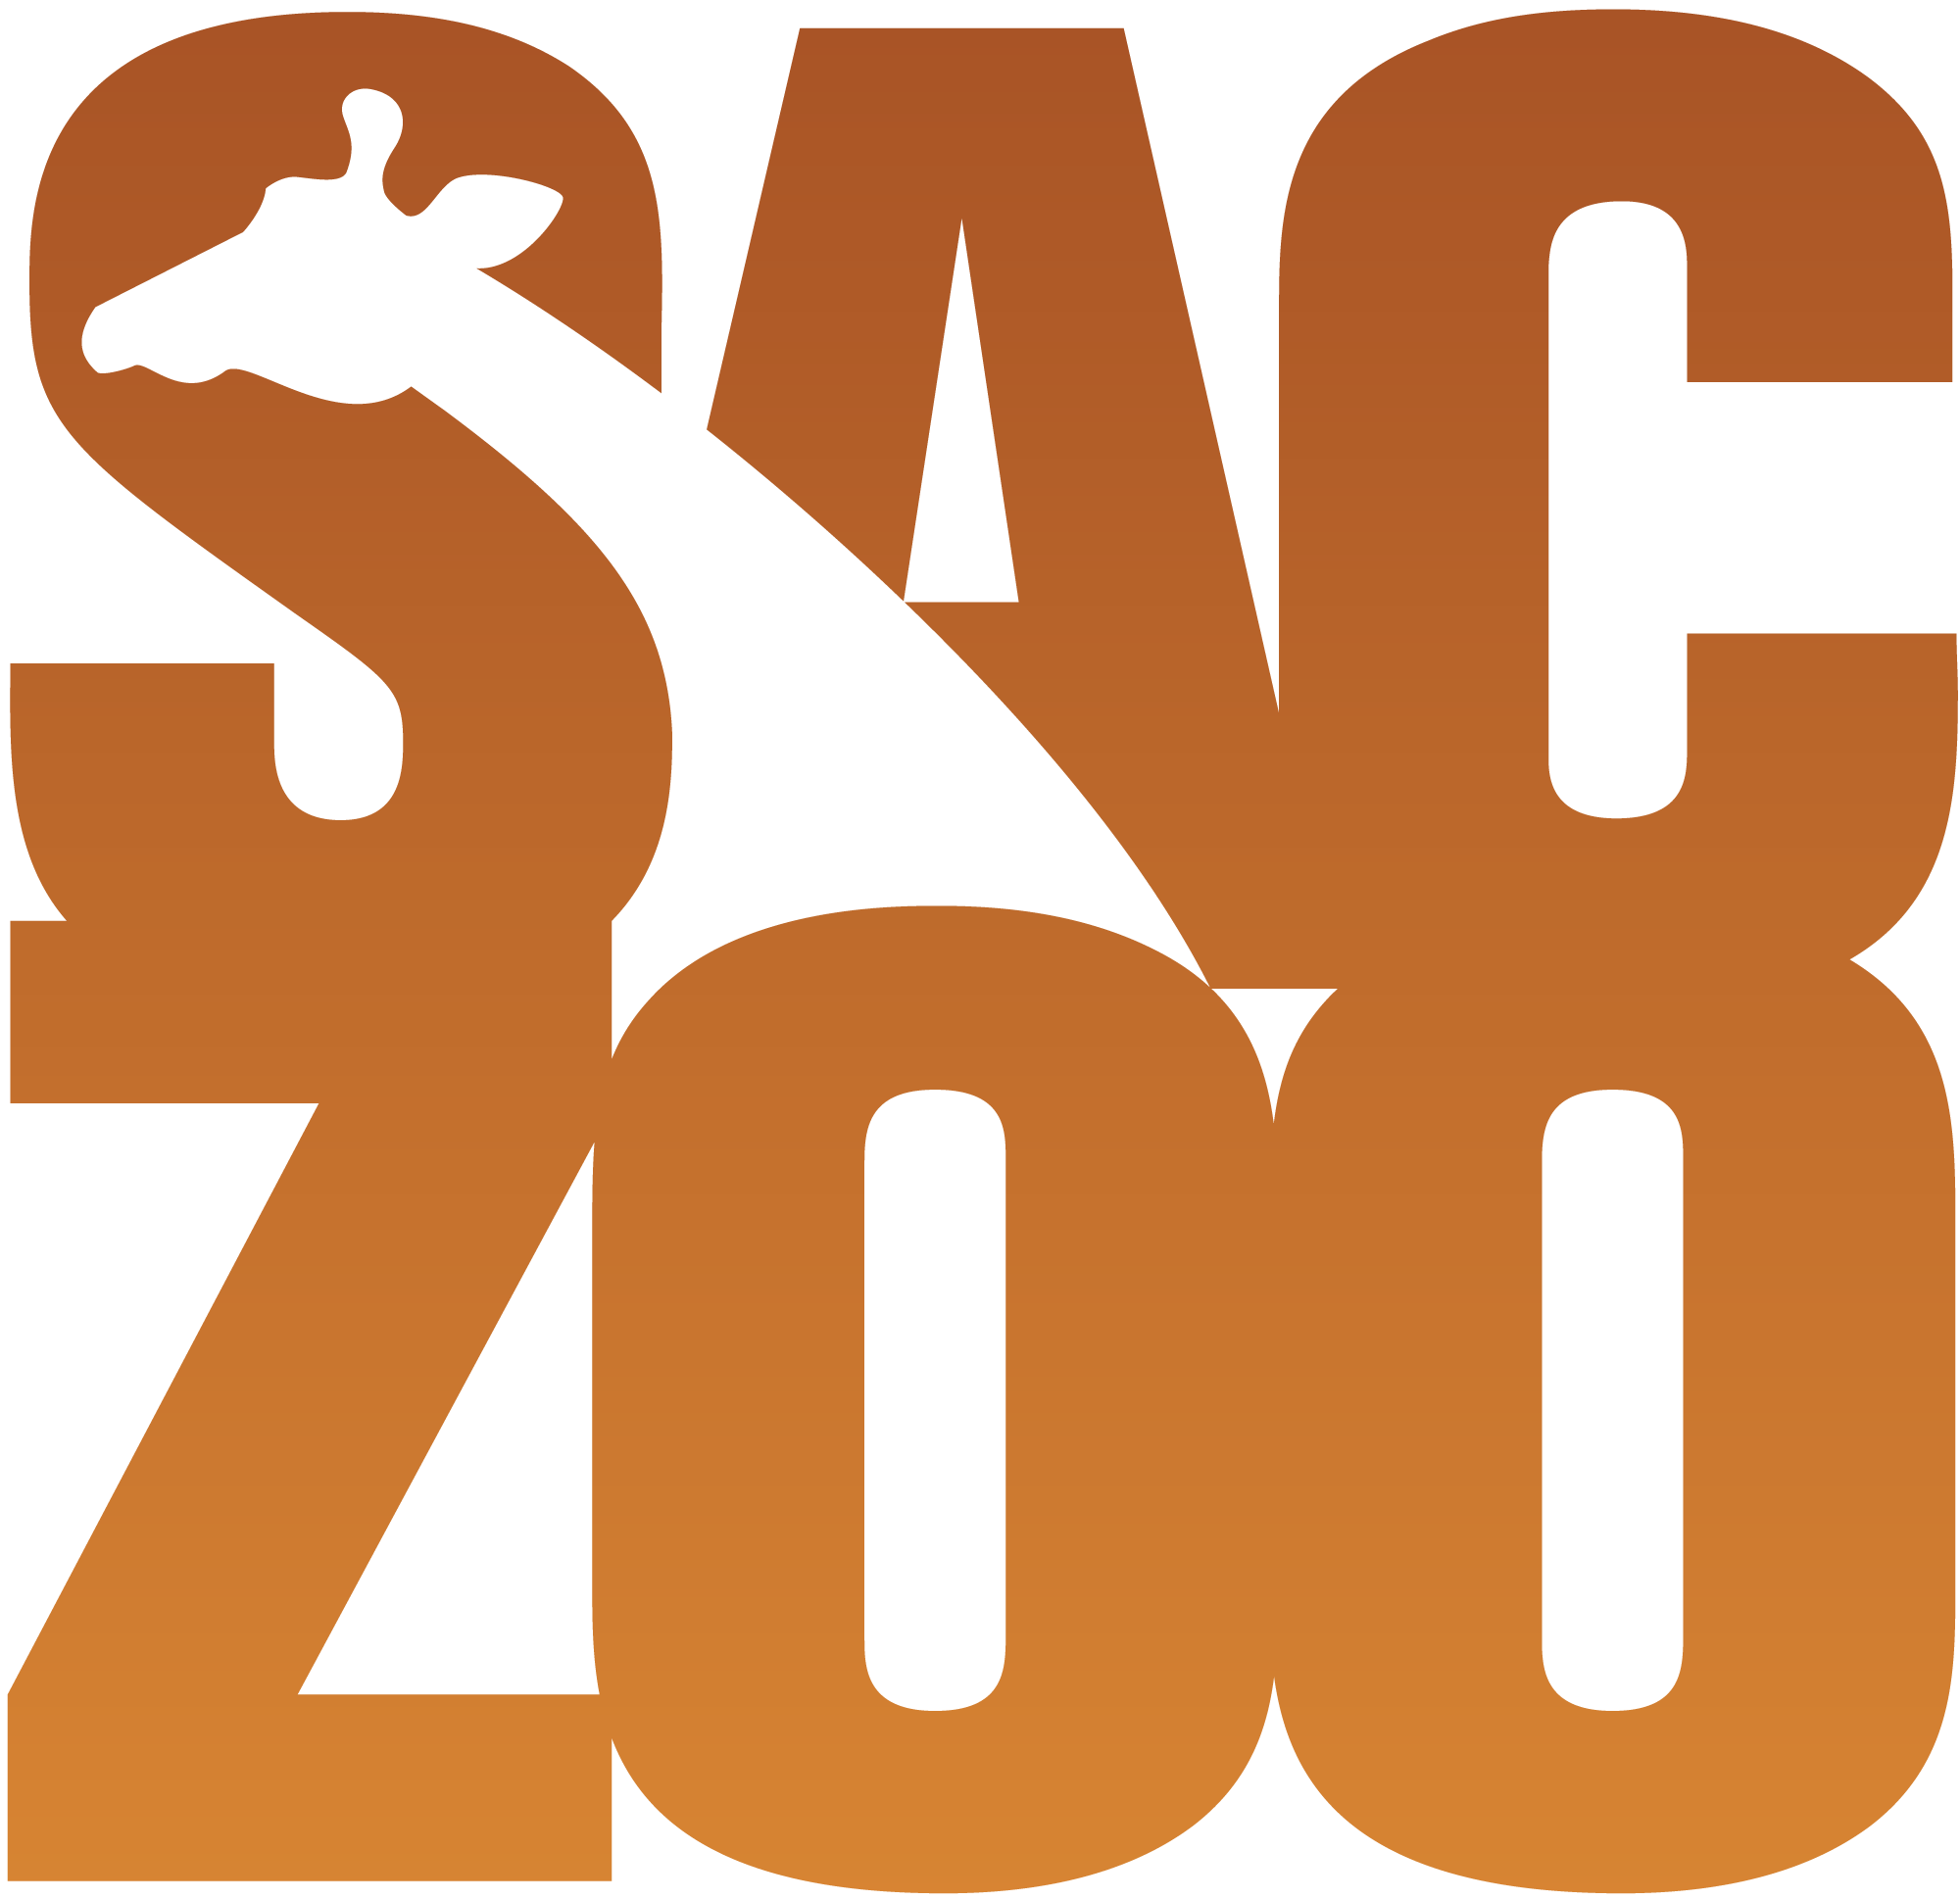 SacZoo_Logo_Primary_Color_Large